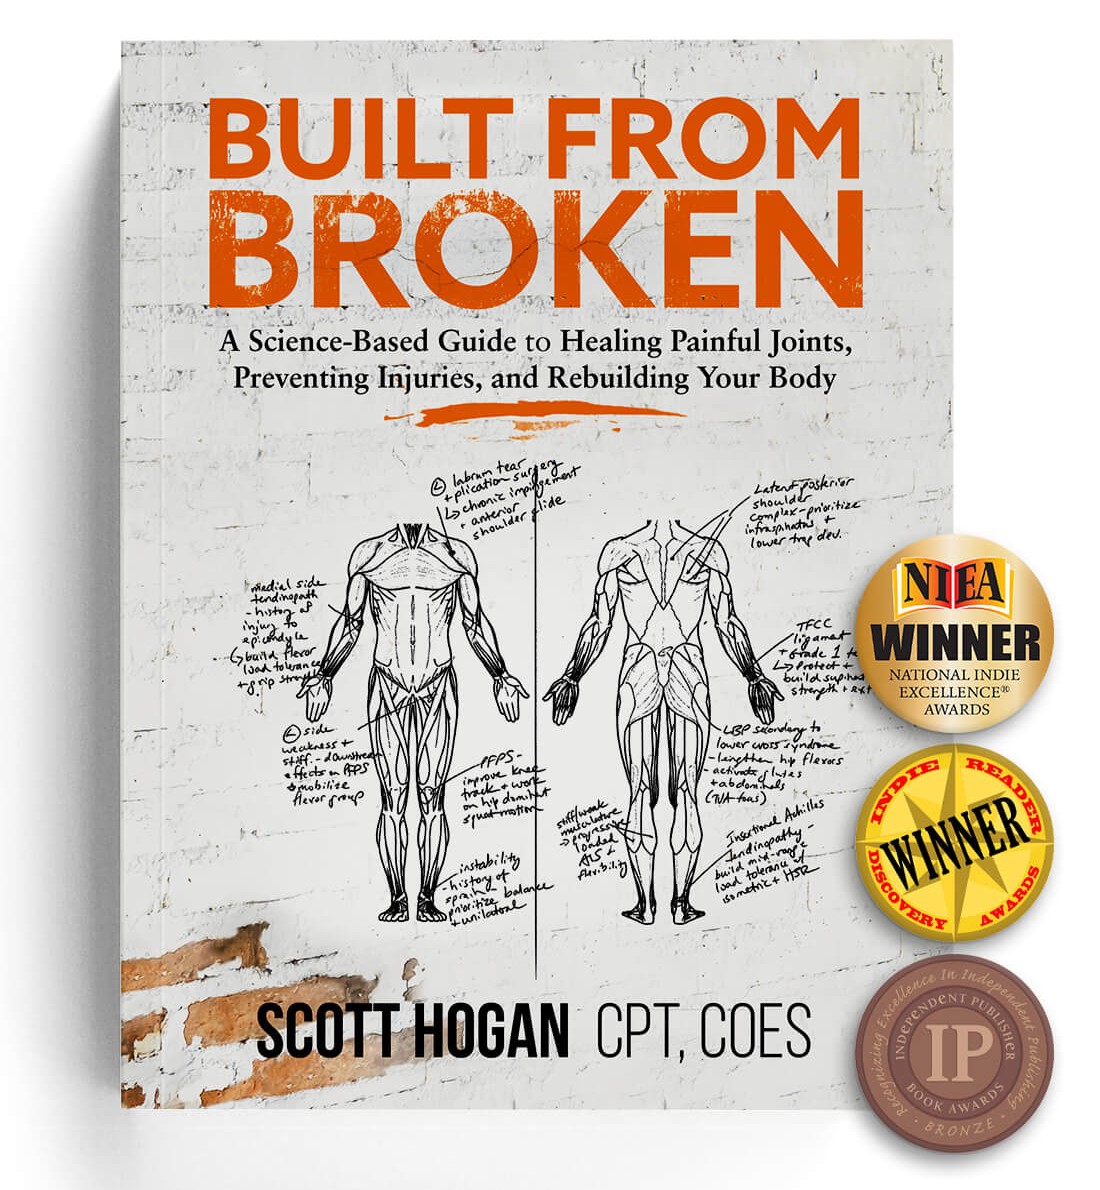 injury supplements book Built from Broken